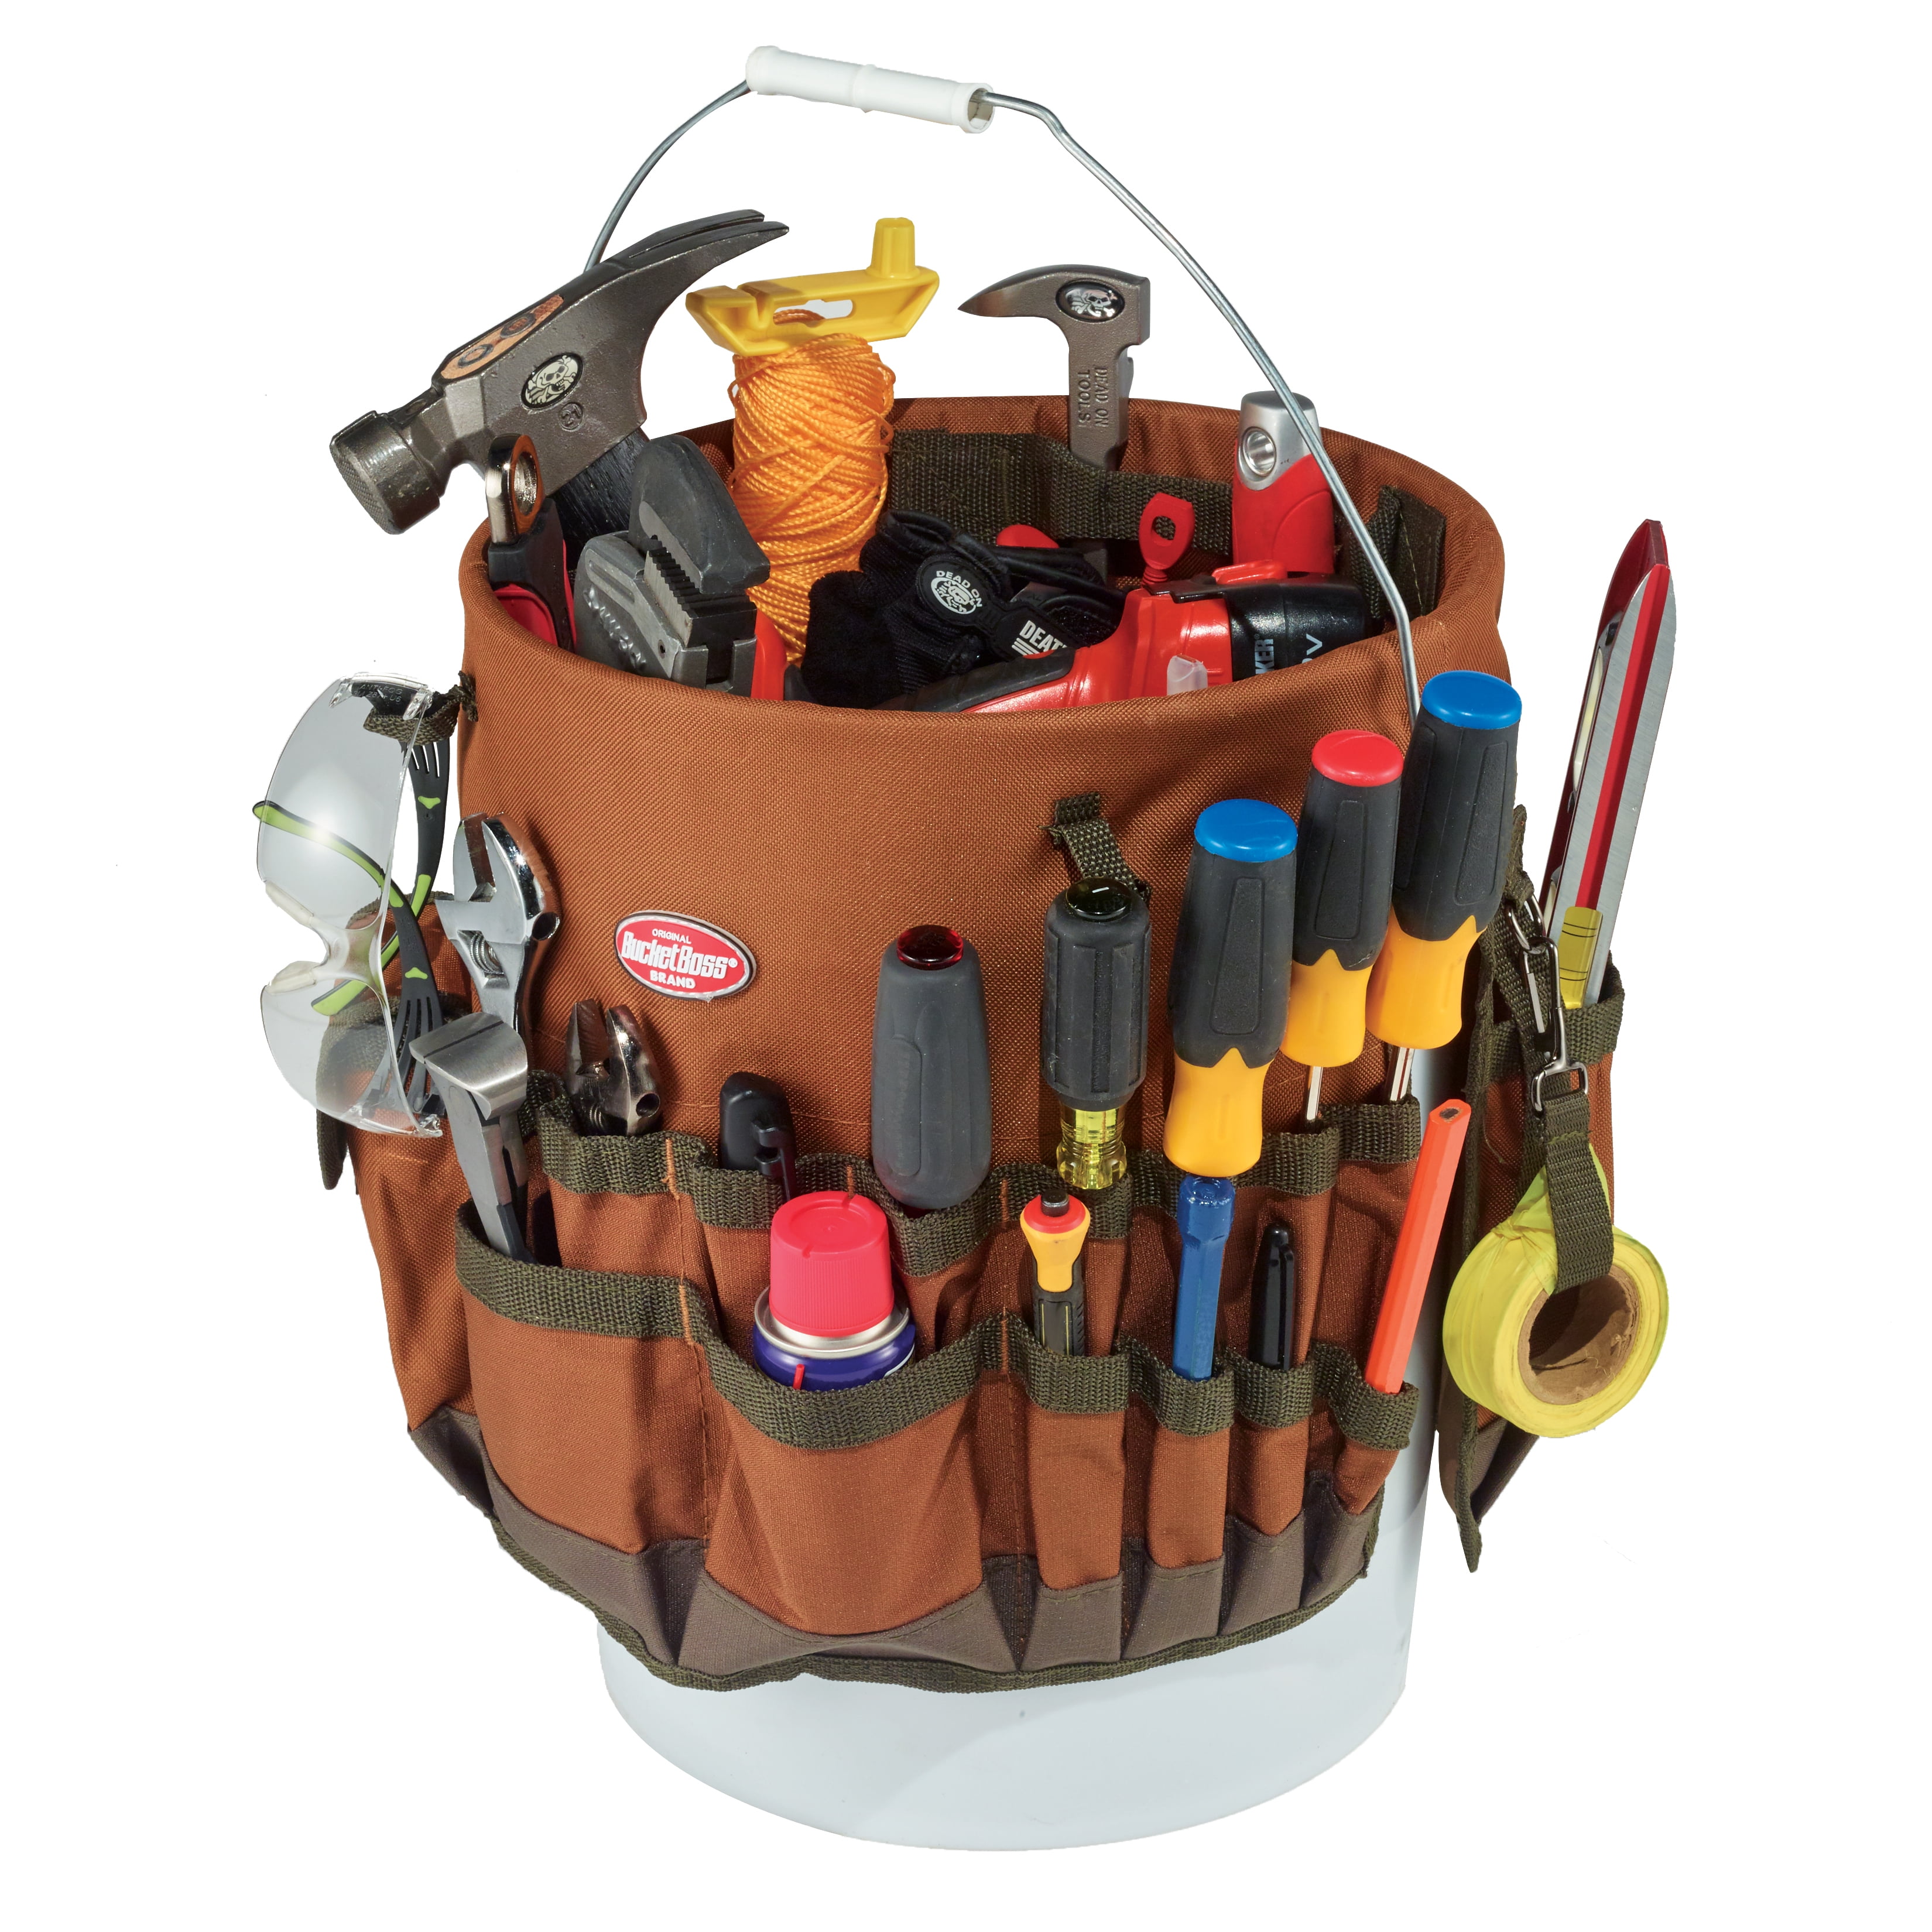 Garden Tools Bag,Gardening Organizer Tote for 5 Gallon Buckets with Pockets  for Tools Garden Caddy G…See more Garden Tools Bag,Gardening Organizer